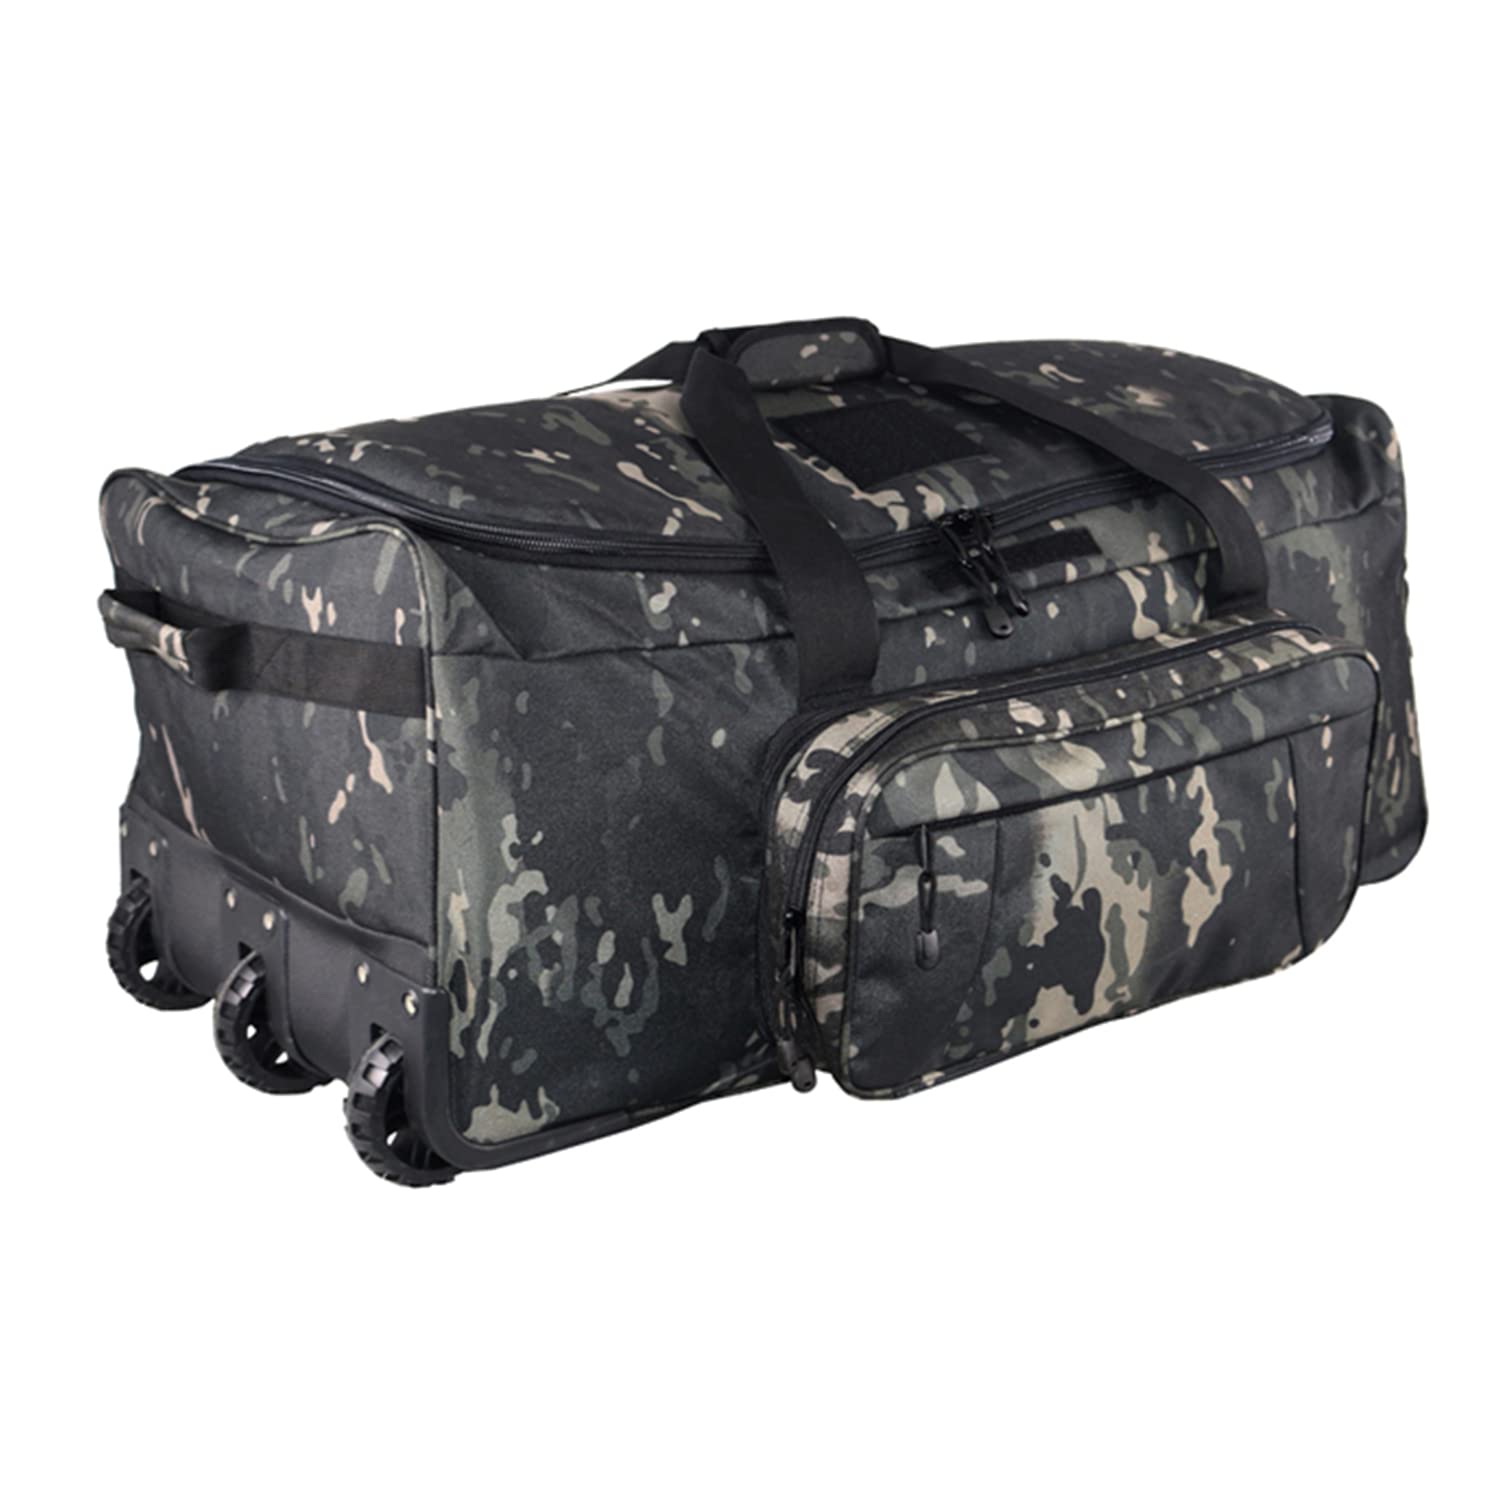 Duffle bag vhiri rolling deployment wheeled suitcase rinorema basa rod bag